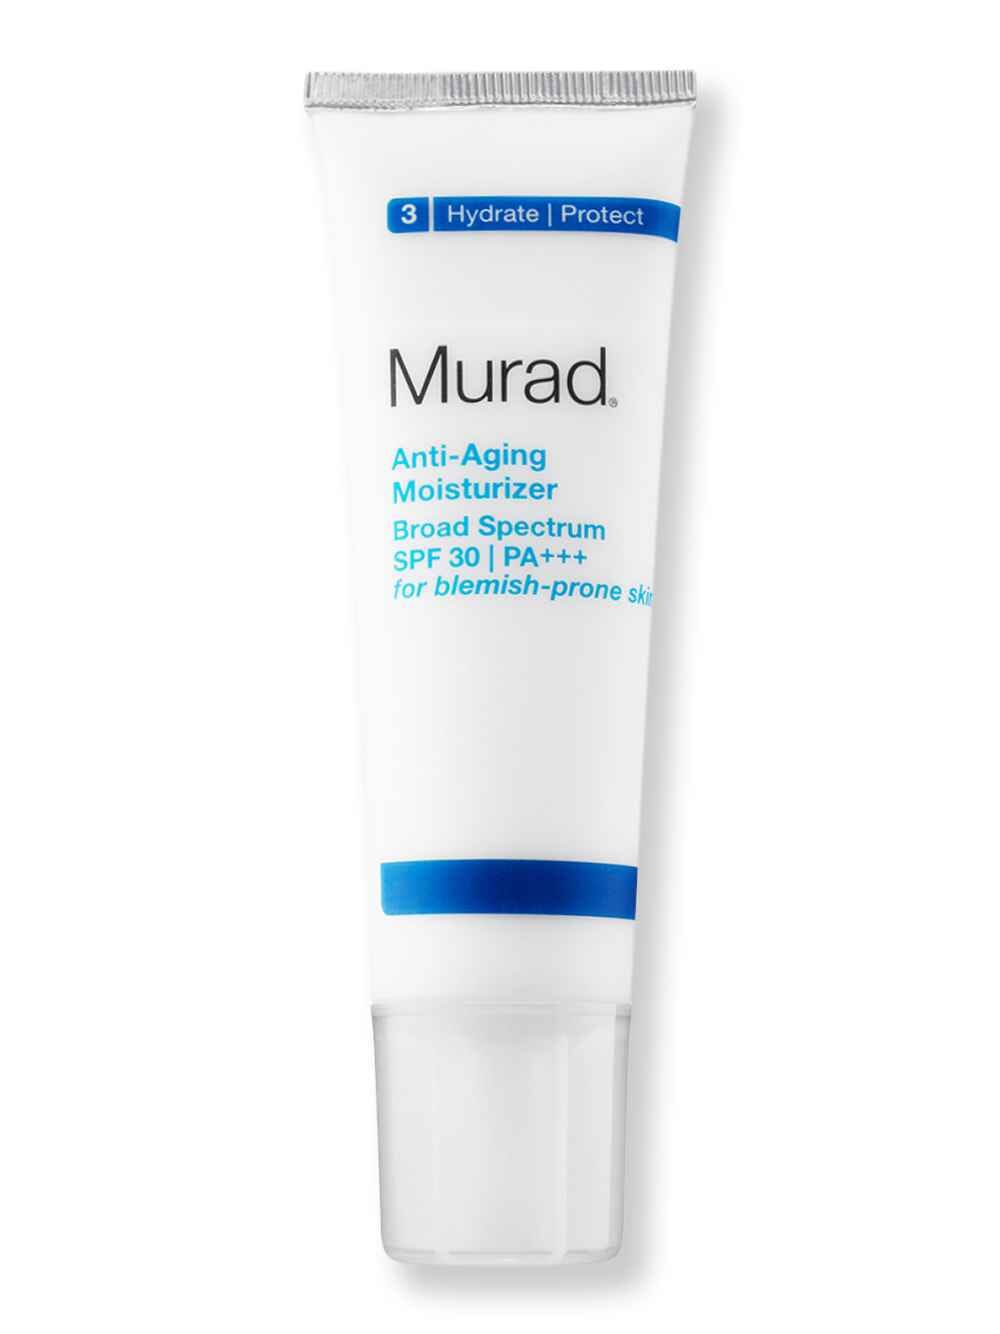 Murad Murad Anti-Aging Moisturizer SPF 30 PA+++ 1.7 oz Face Moisturizers 